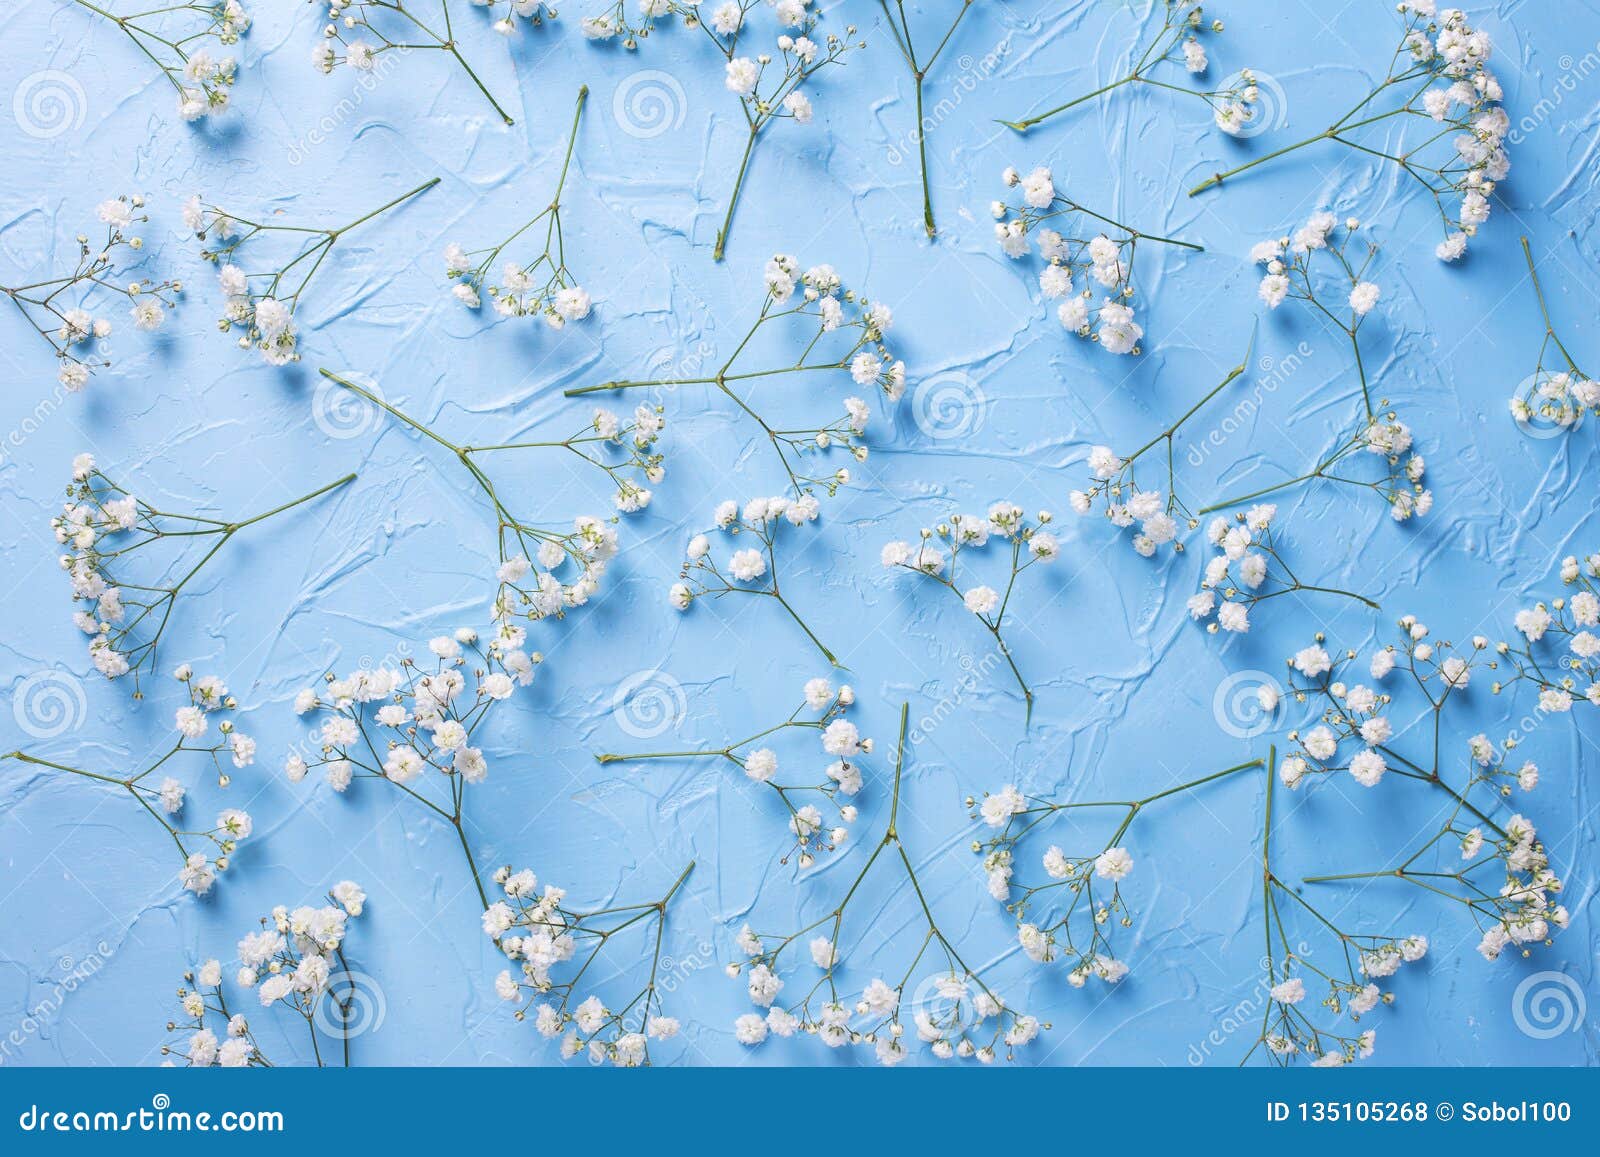 pattern from fresh white gypsofila flowers onvblue textured background